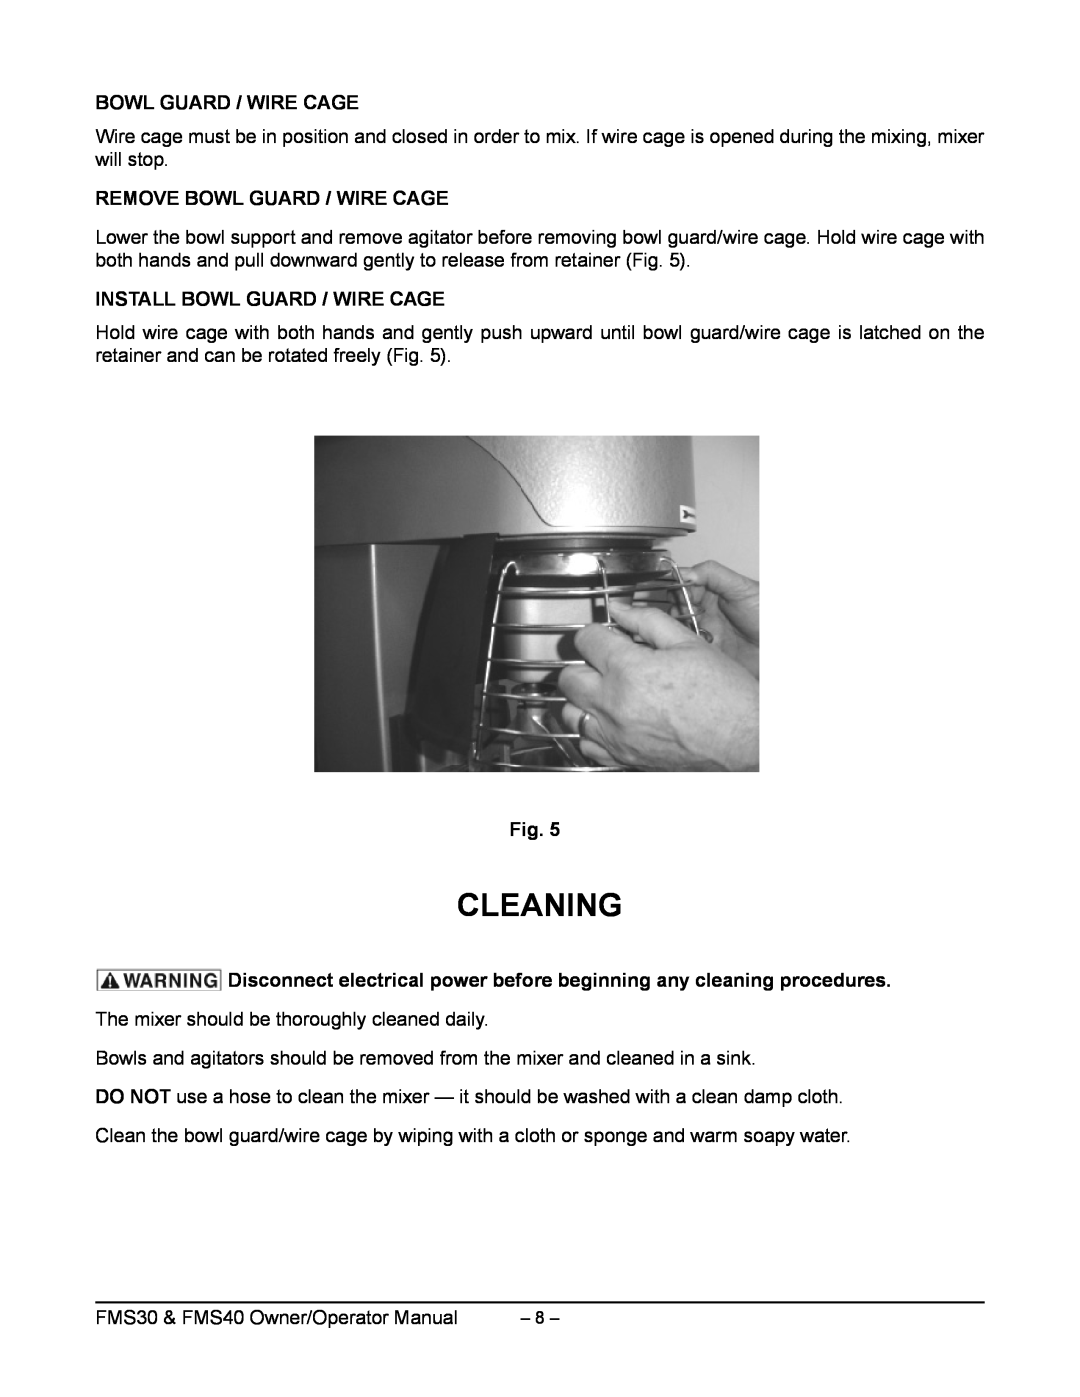 Berkel FMS40 manual Cleaning, Remove Bowl Guard / Wire Cage, Install Bowl Guard / Wire Cage 